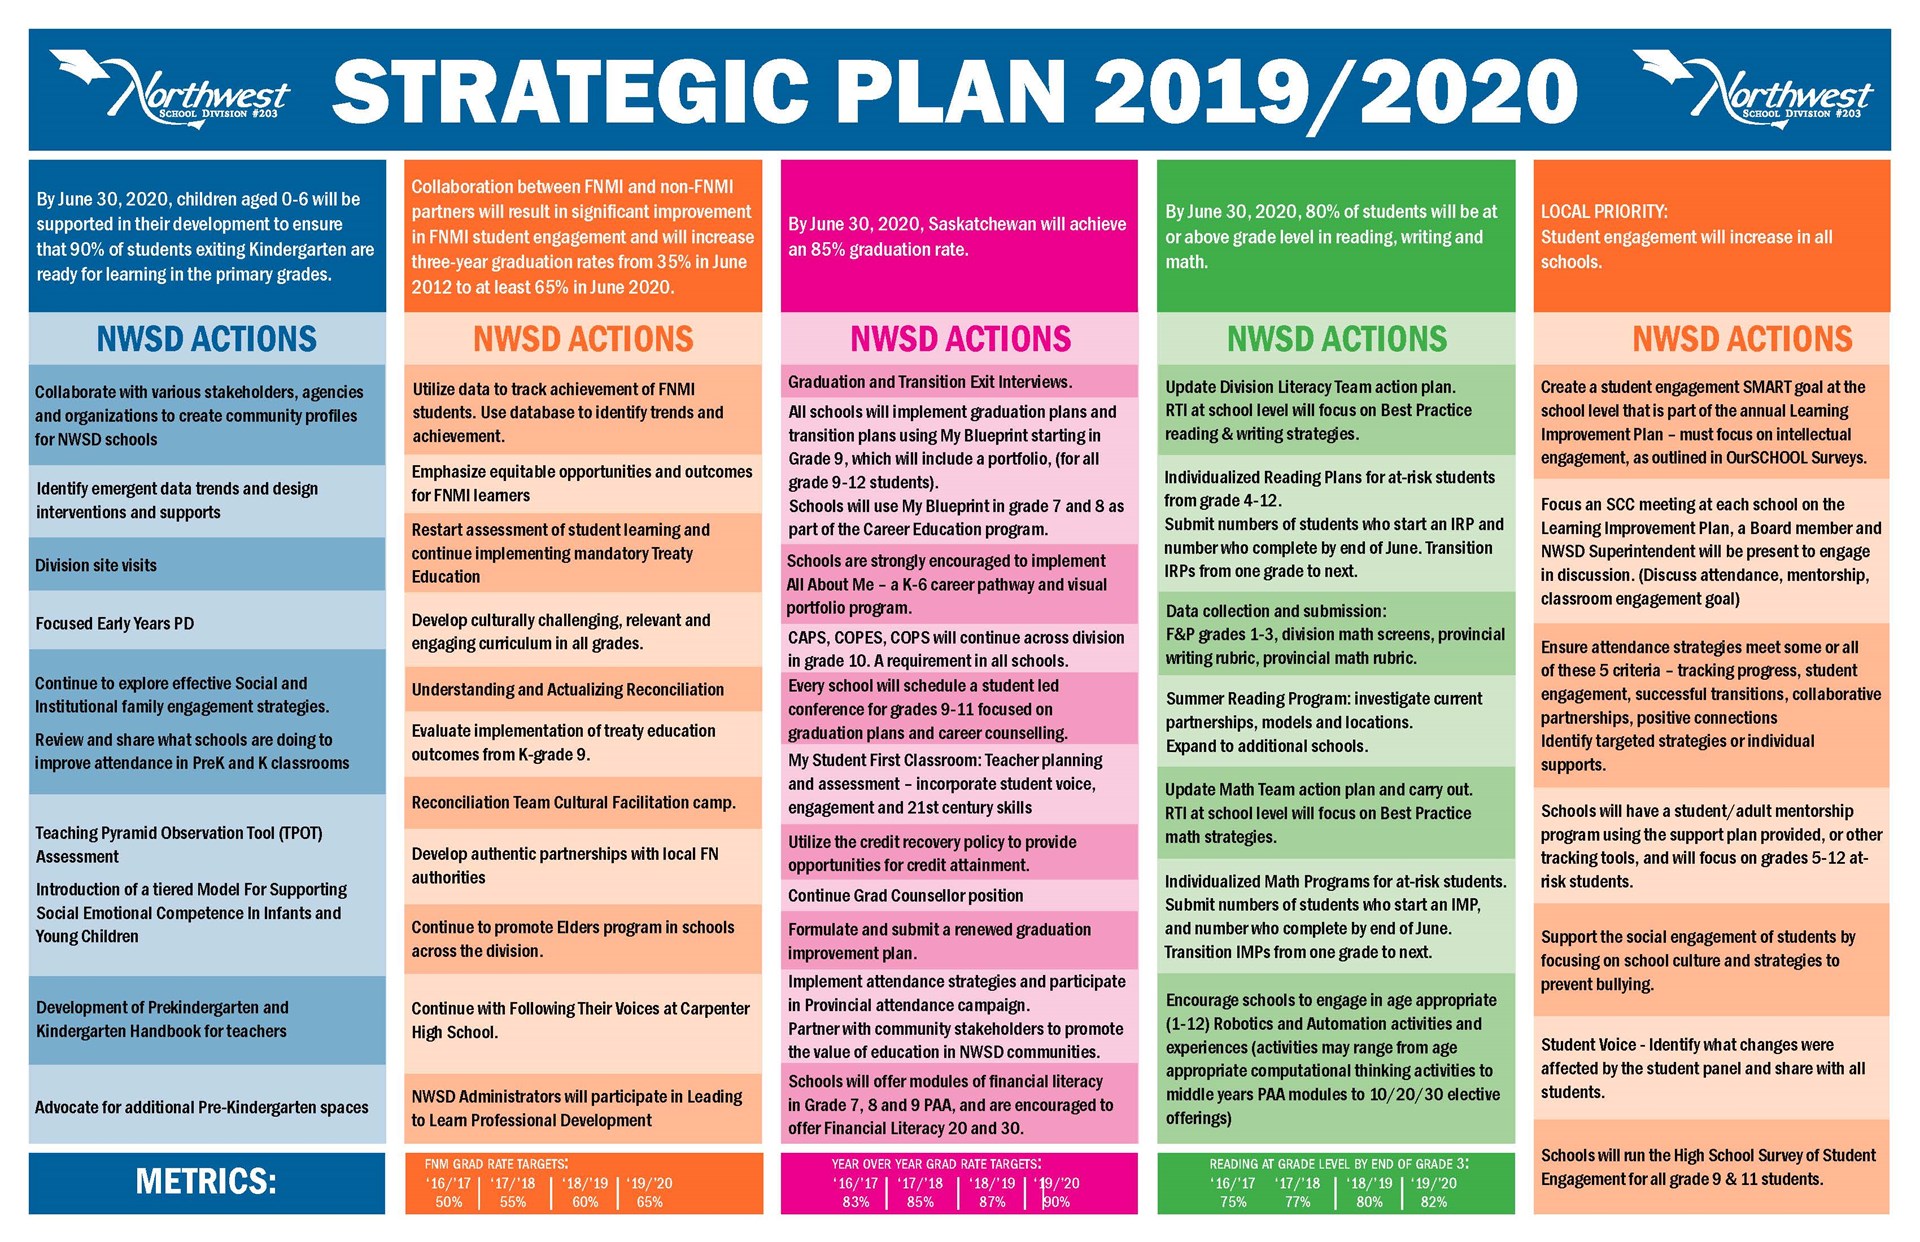 strategic planning in higher education pdf